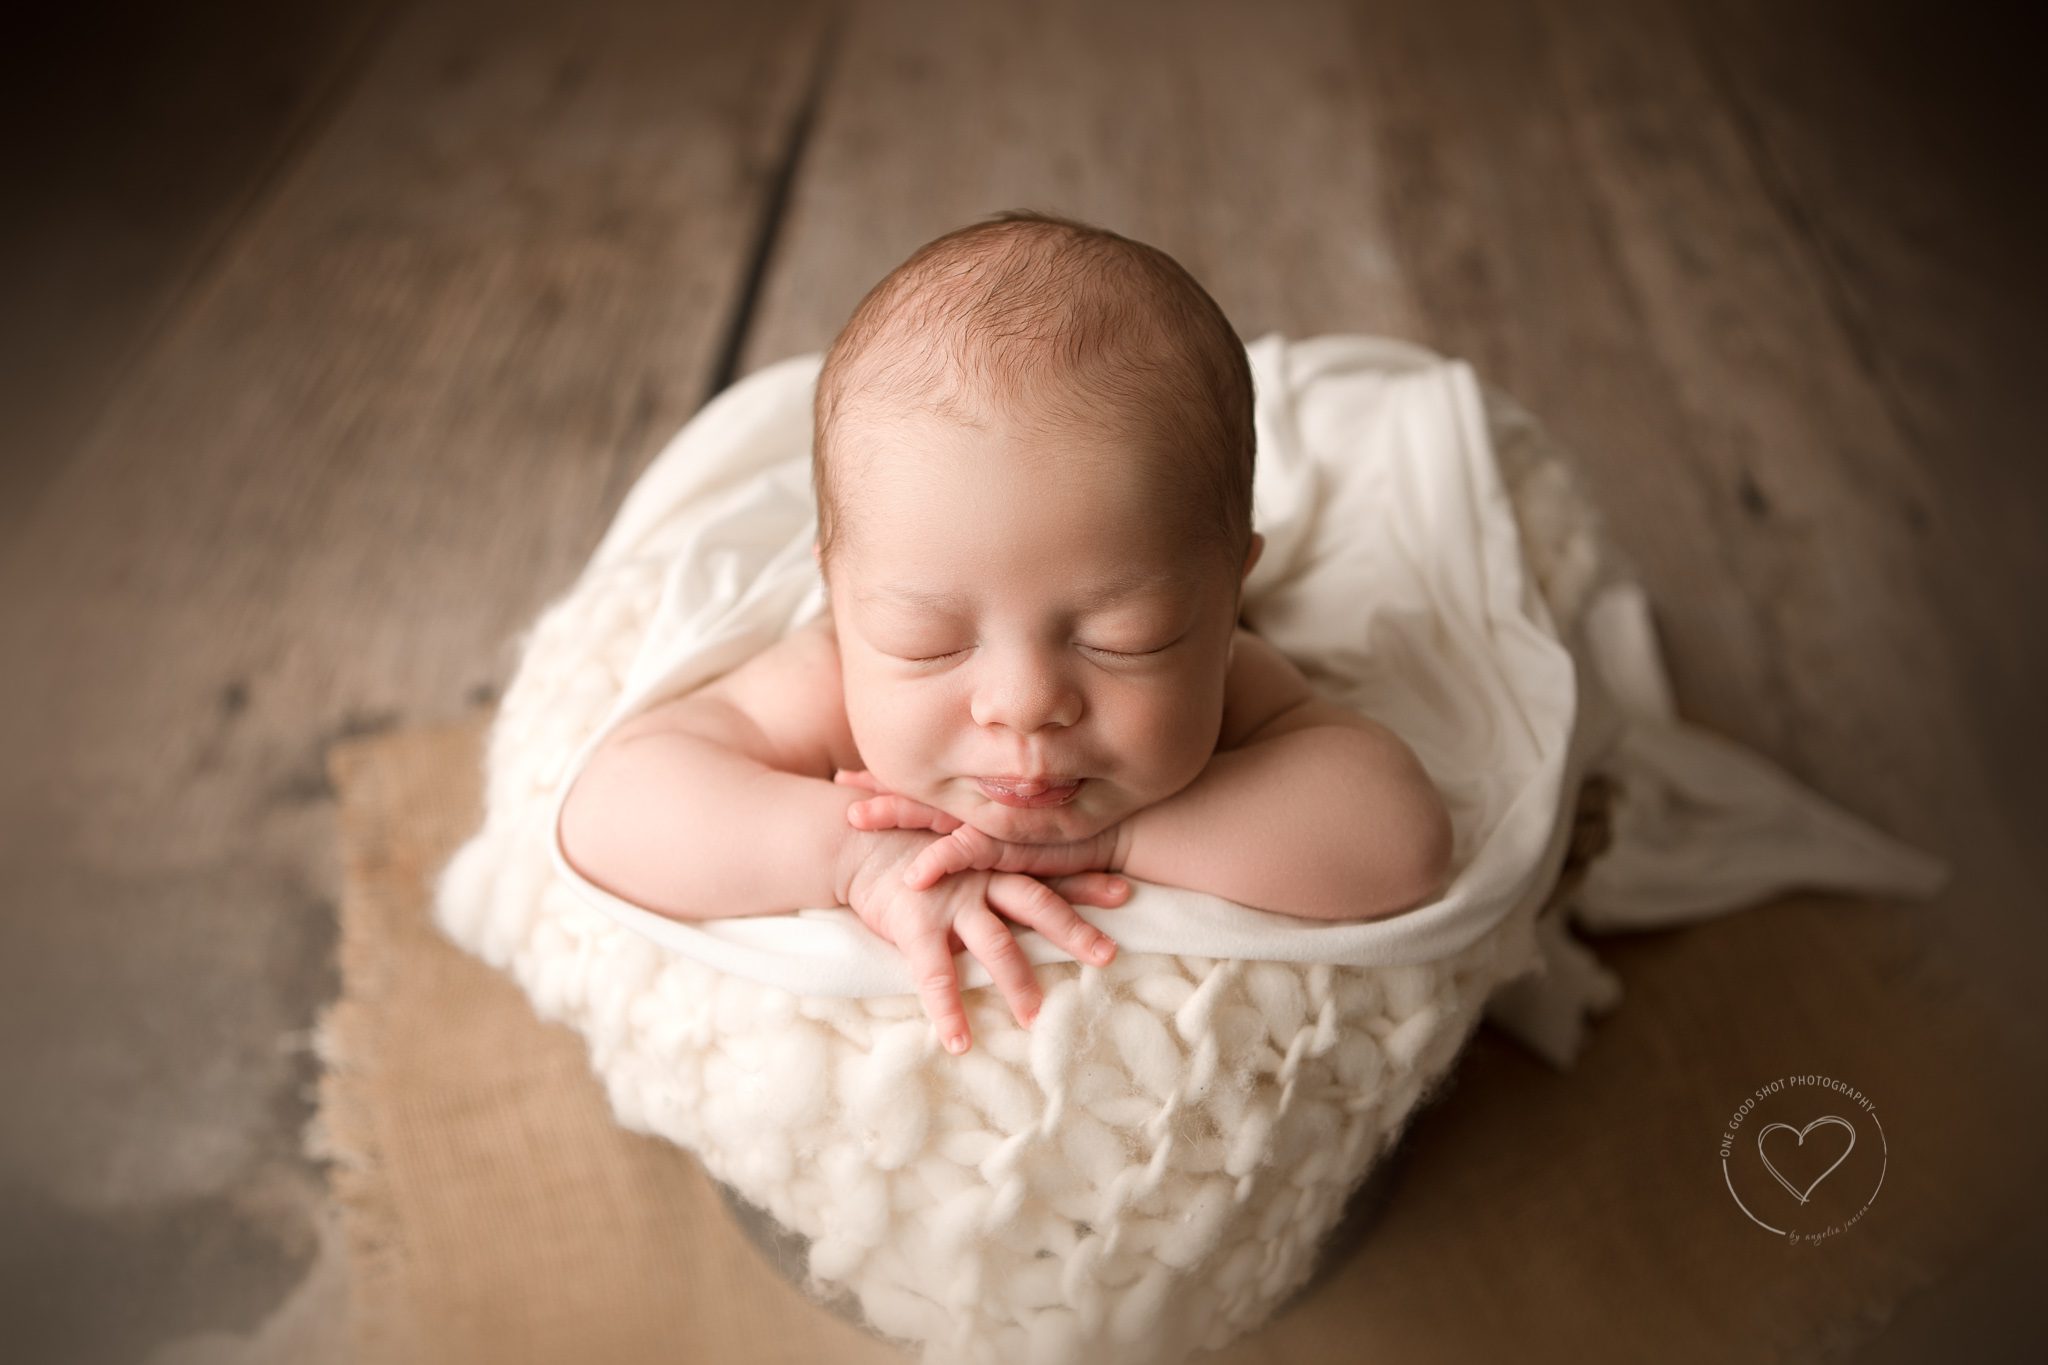 newborn baby boy, bucket pose, head on hands, fresno photographer